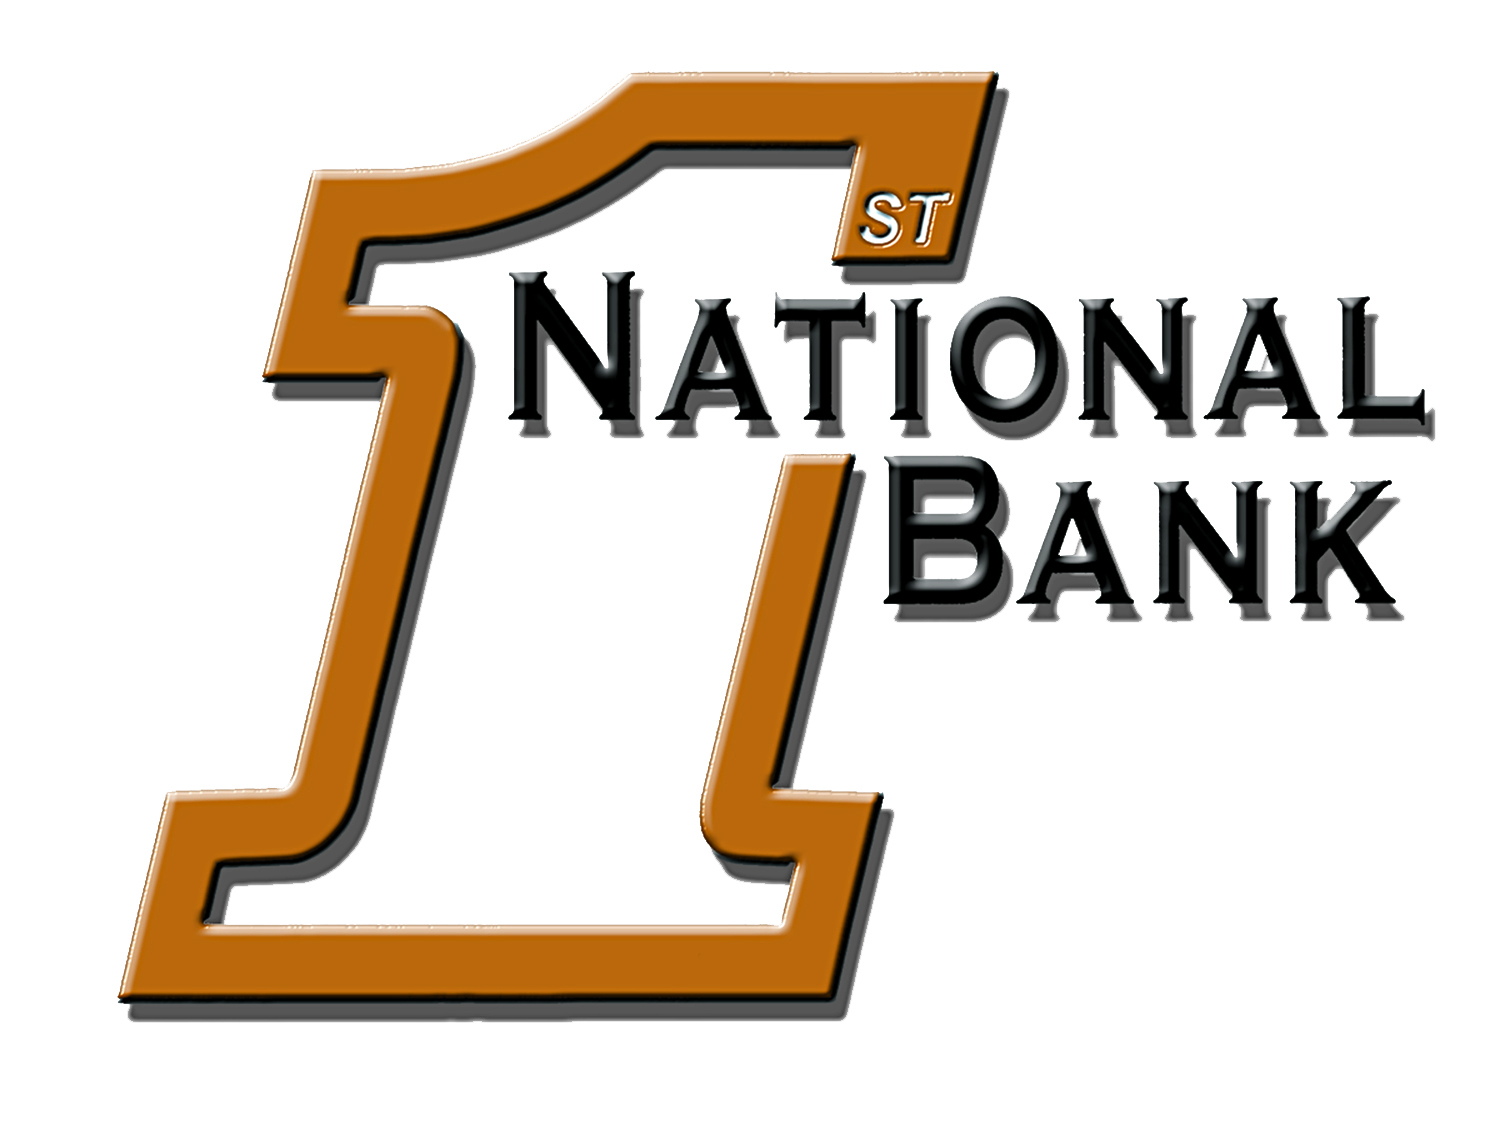 1st NATIONAL BANK